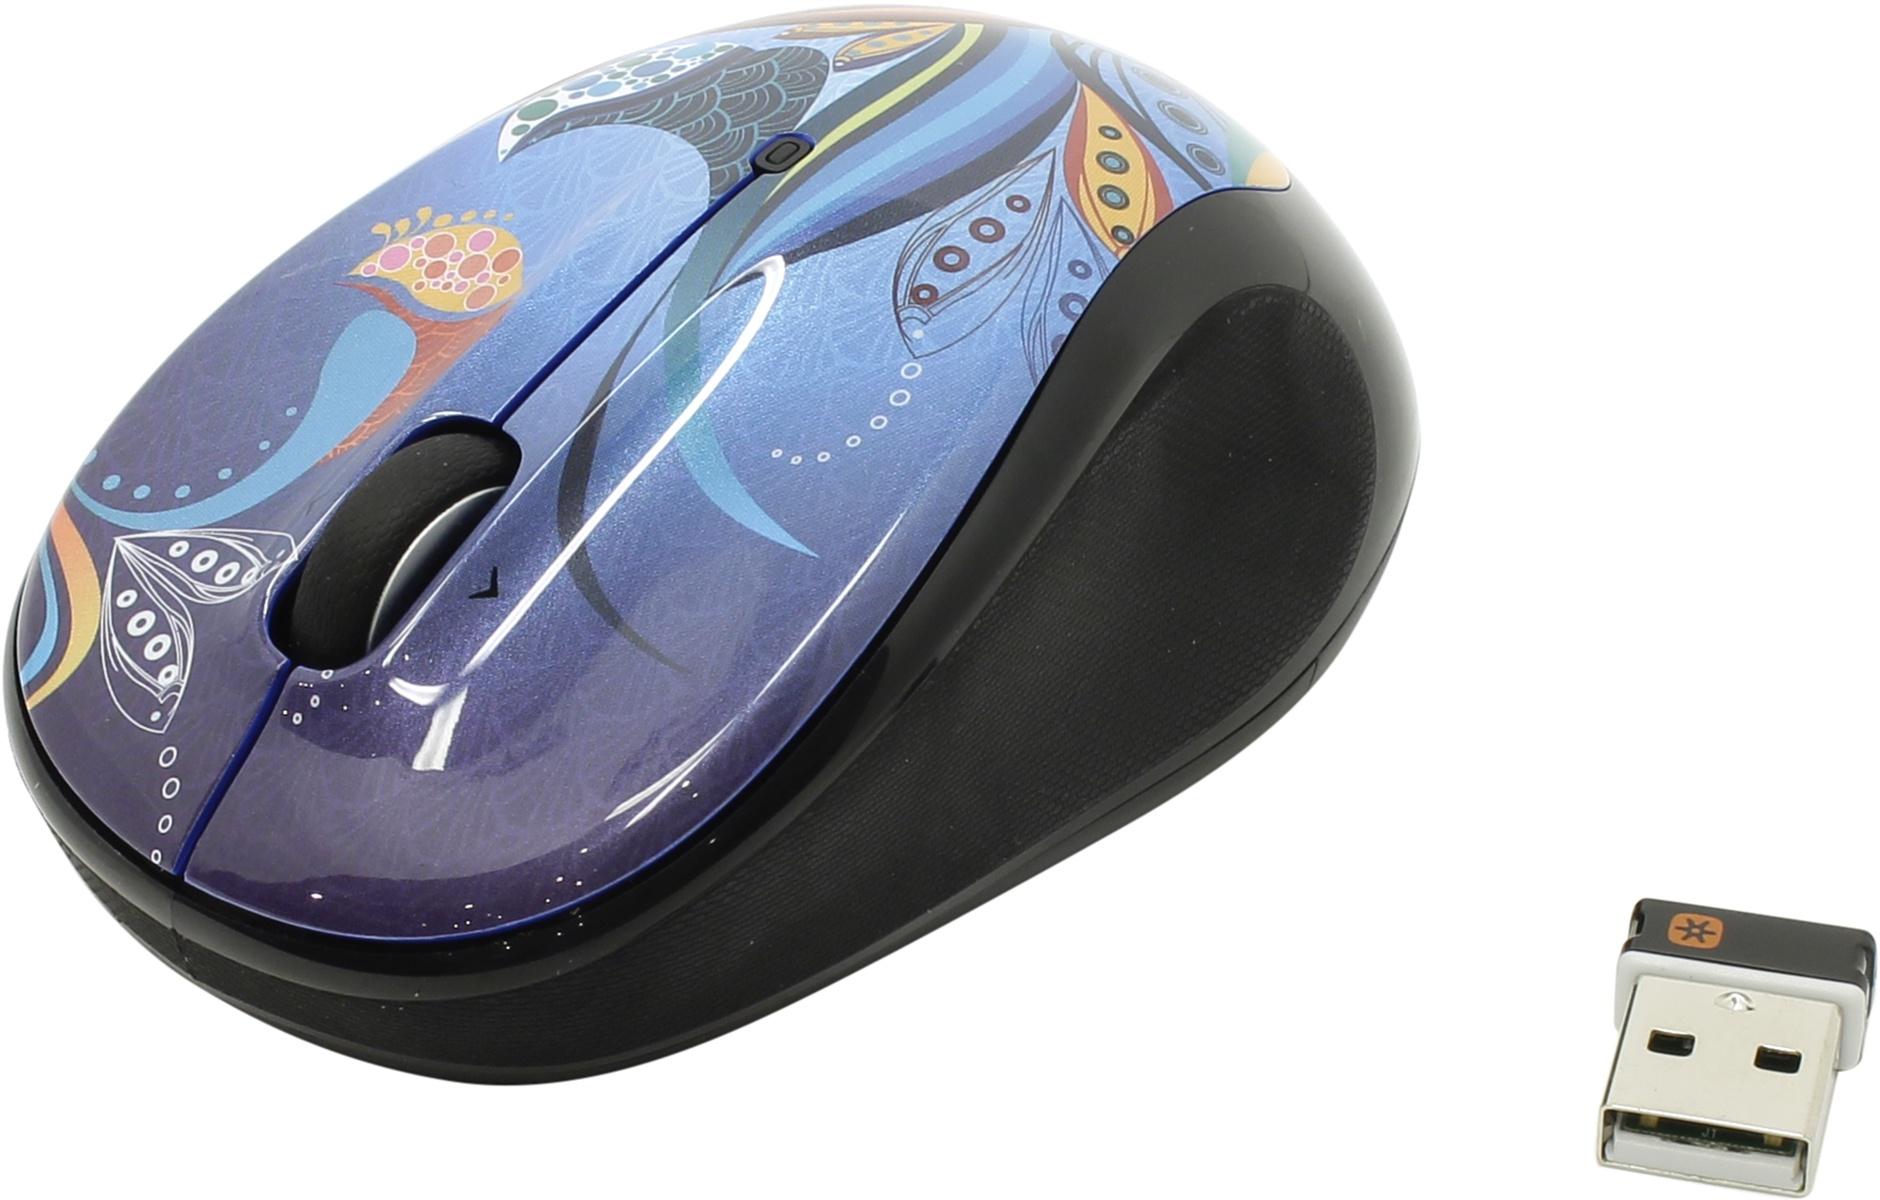 Logitech m325 Limited. Мышь Logitech Wireless Mouse m235 Beige USB. Logitech Wireless Mouse m190 (2232lz90y3r9). Манипулятор Logitech m185 Wireless Mouse (RTL) USB 3btn+Roll уменьшенная. Er 12 325 m1